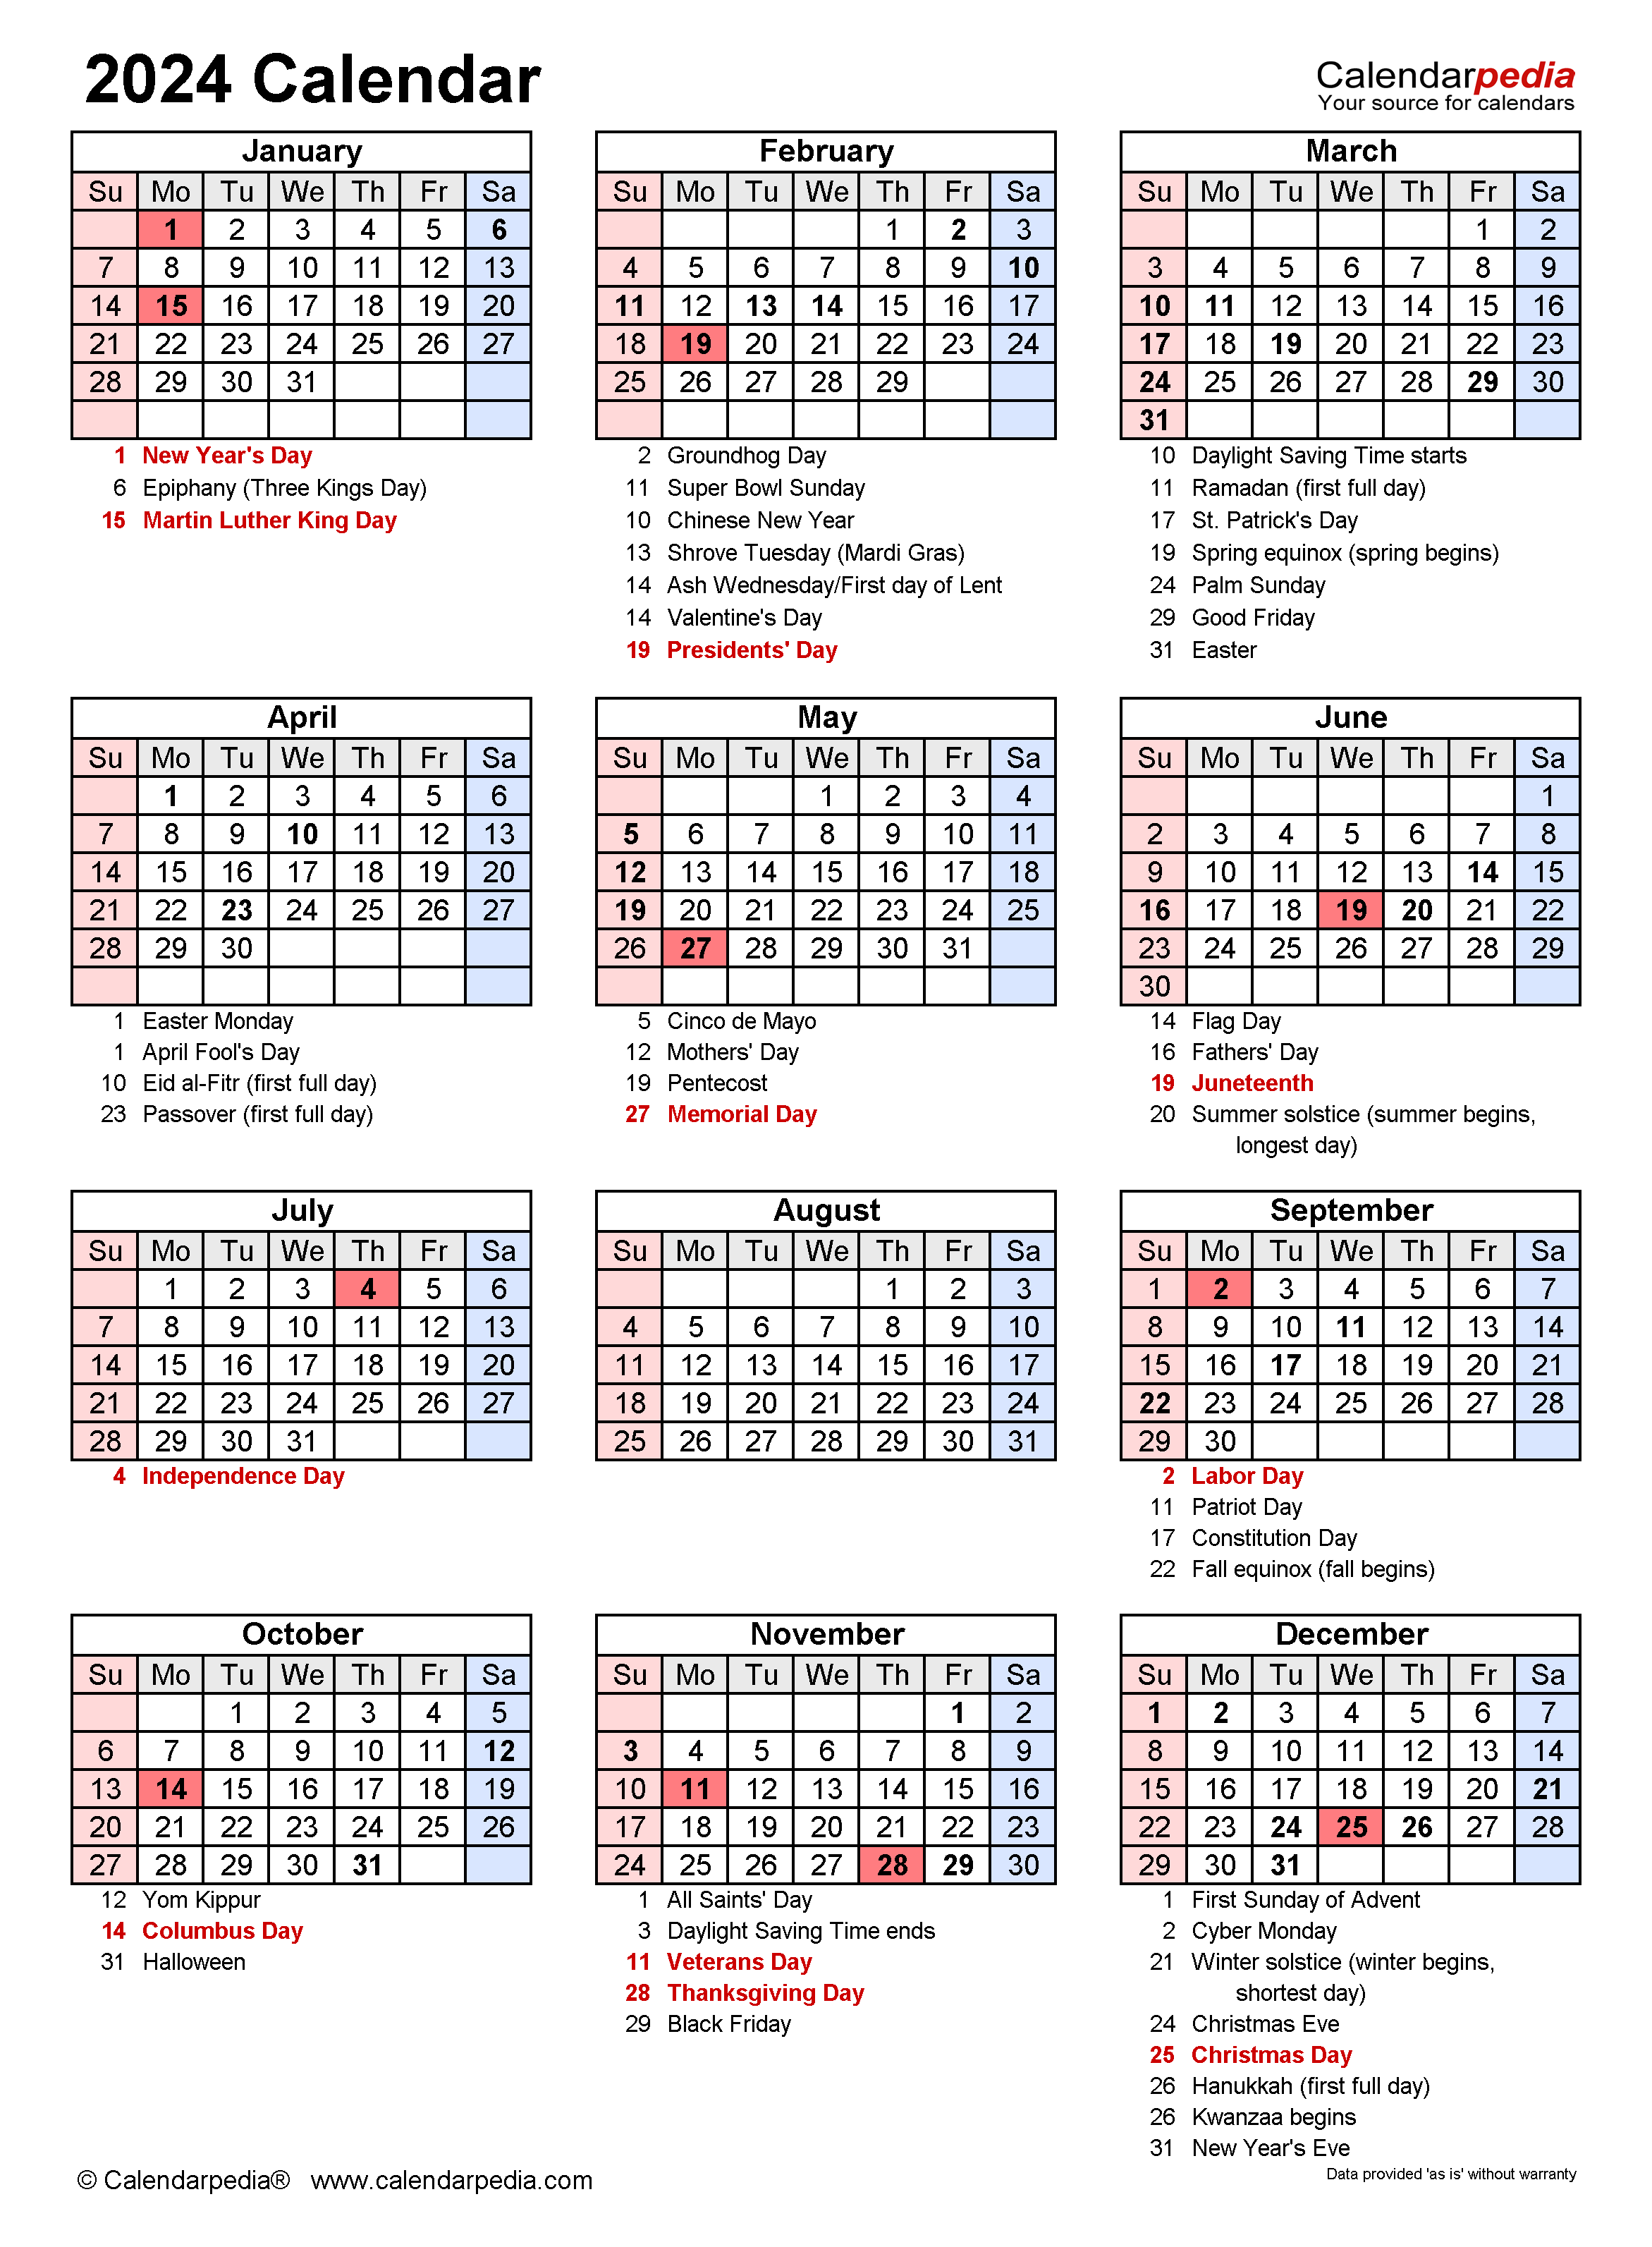 2024 Calendar Free Printable PDF Templates Calendarpedia - Free Printable 2024 Calendar With Holidays One Page Portrait